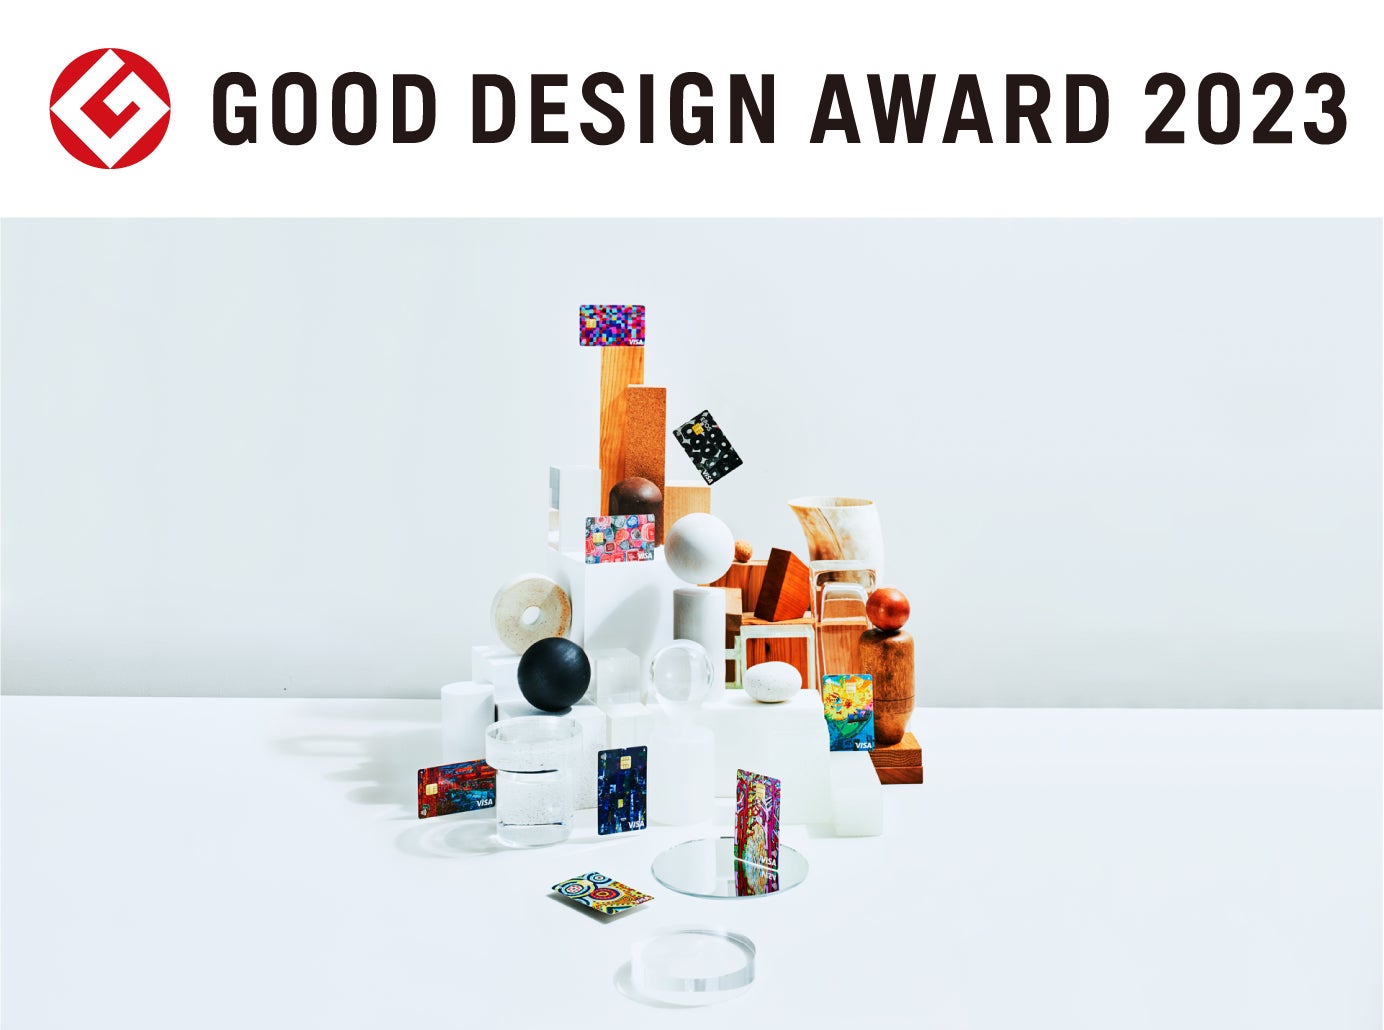 「auカブコム証券アプリ」が「2023年度グッドデザイン賞」を受賞